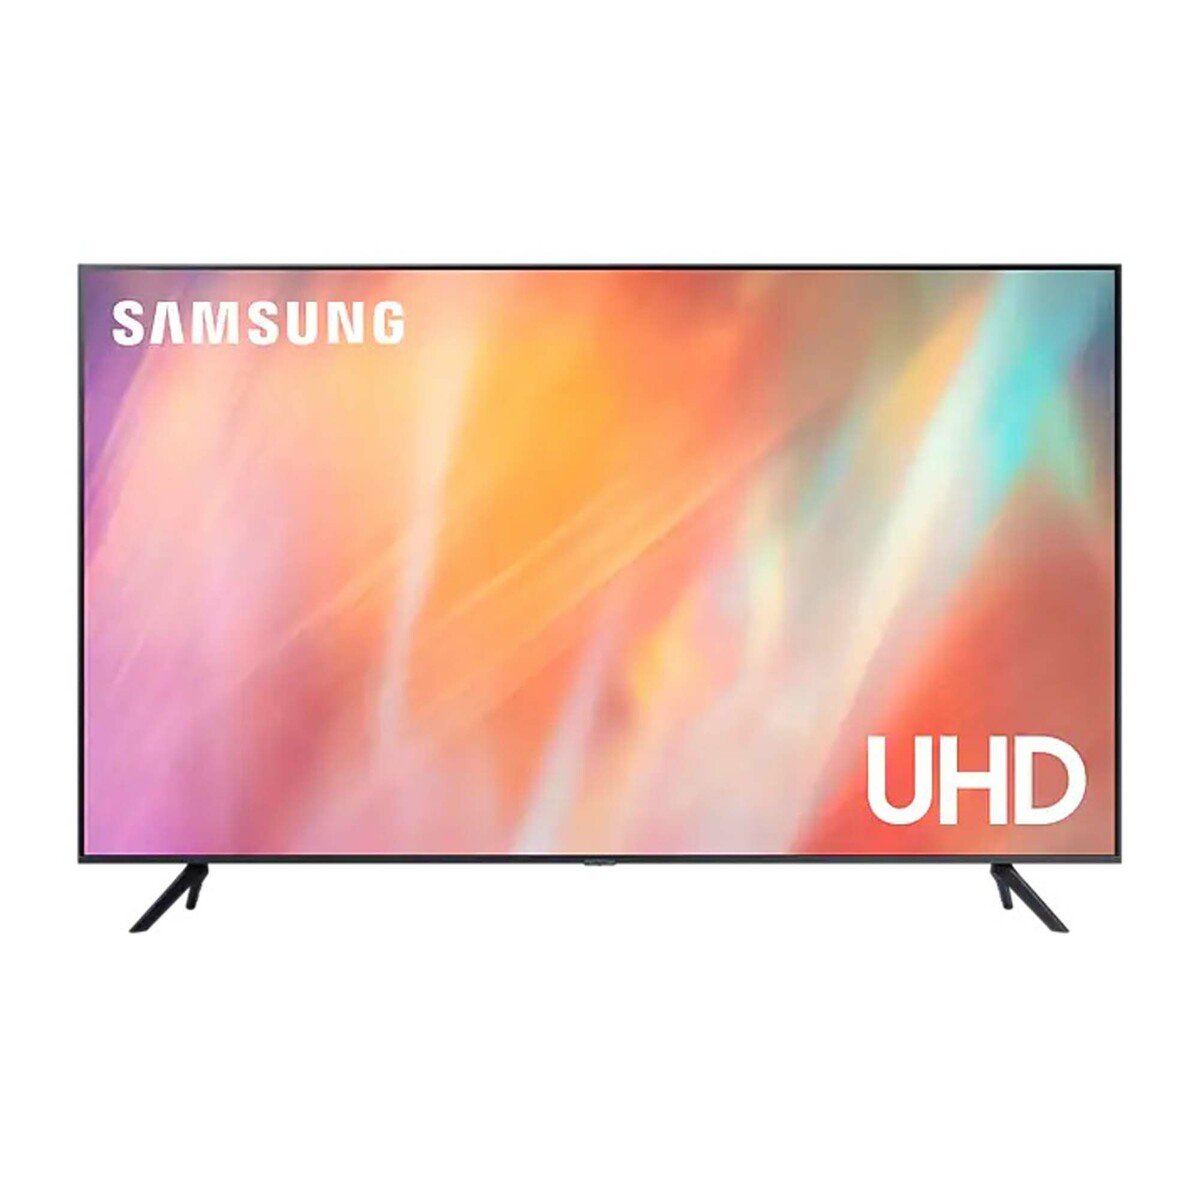 Samsung 65 inches 4K UHD Smart LED TV, Titan Gray, UA65AU7000UXZN